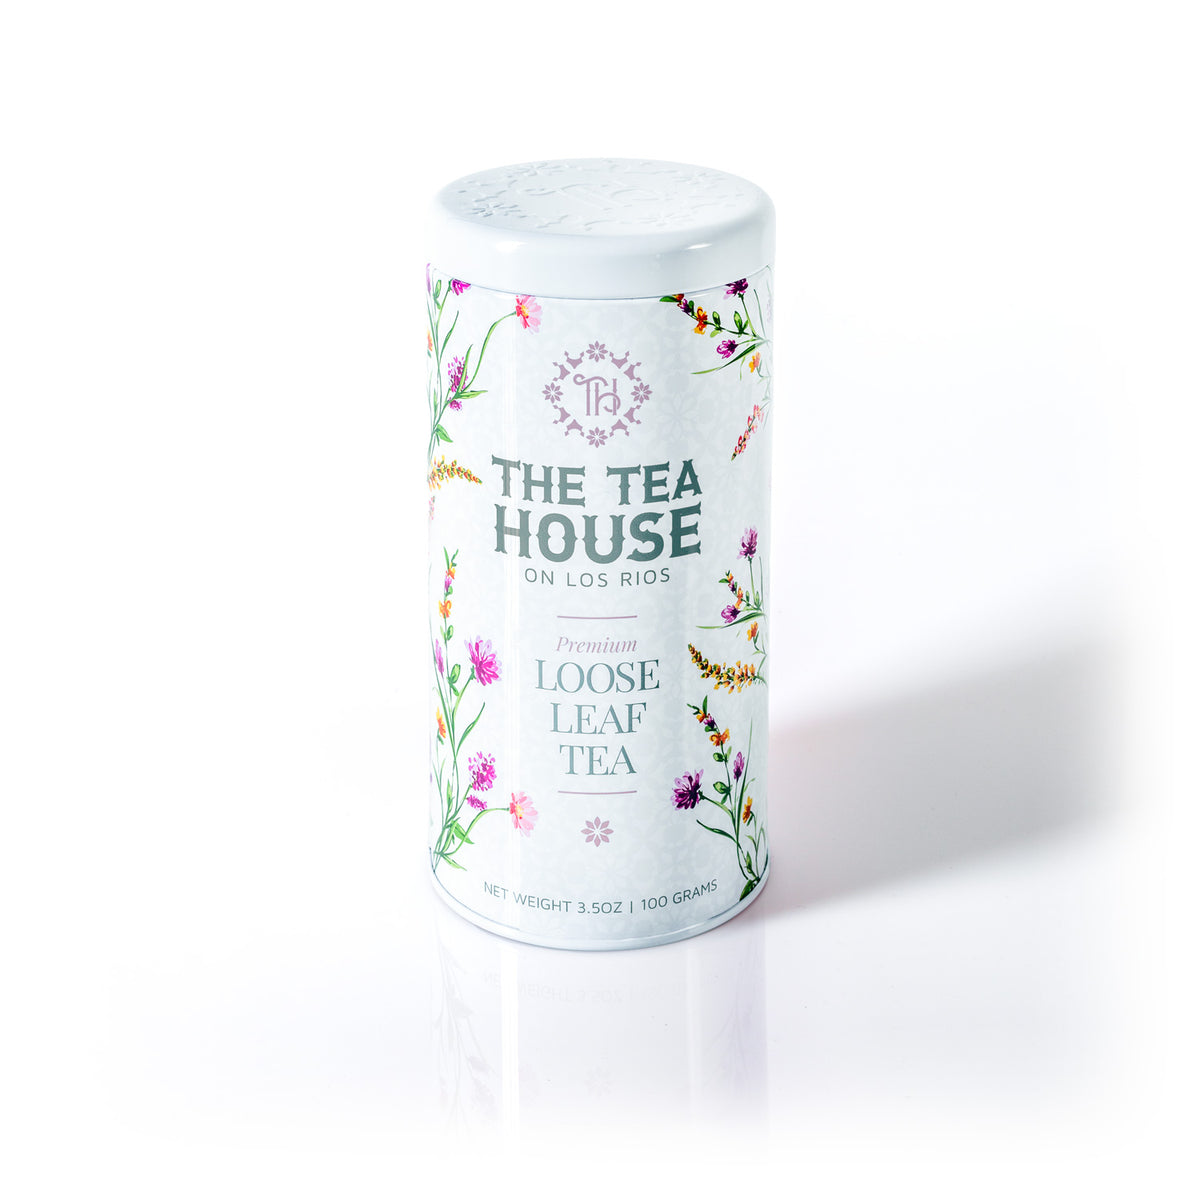 NEW 100g Loose Leaf Tea Tin from The Tea House on Los Rios